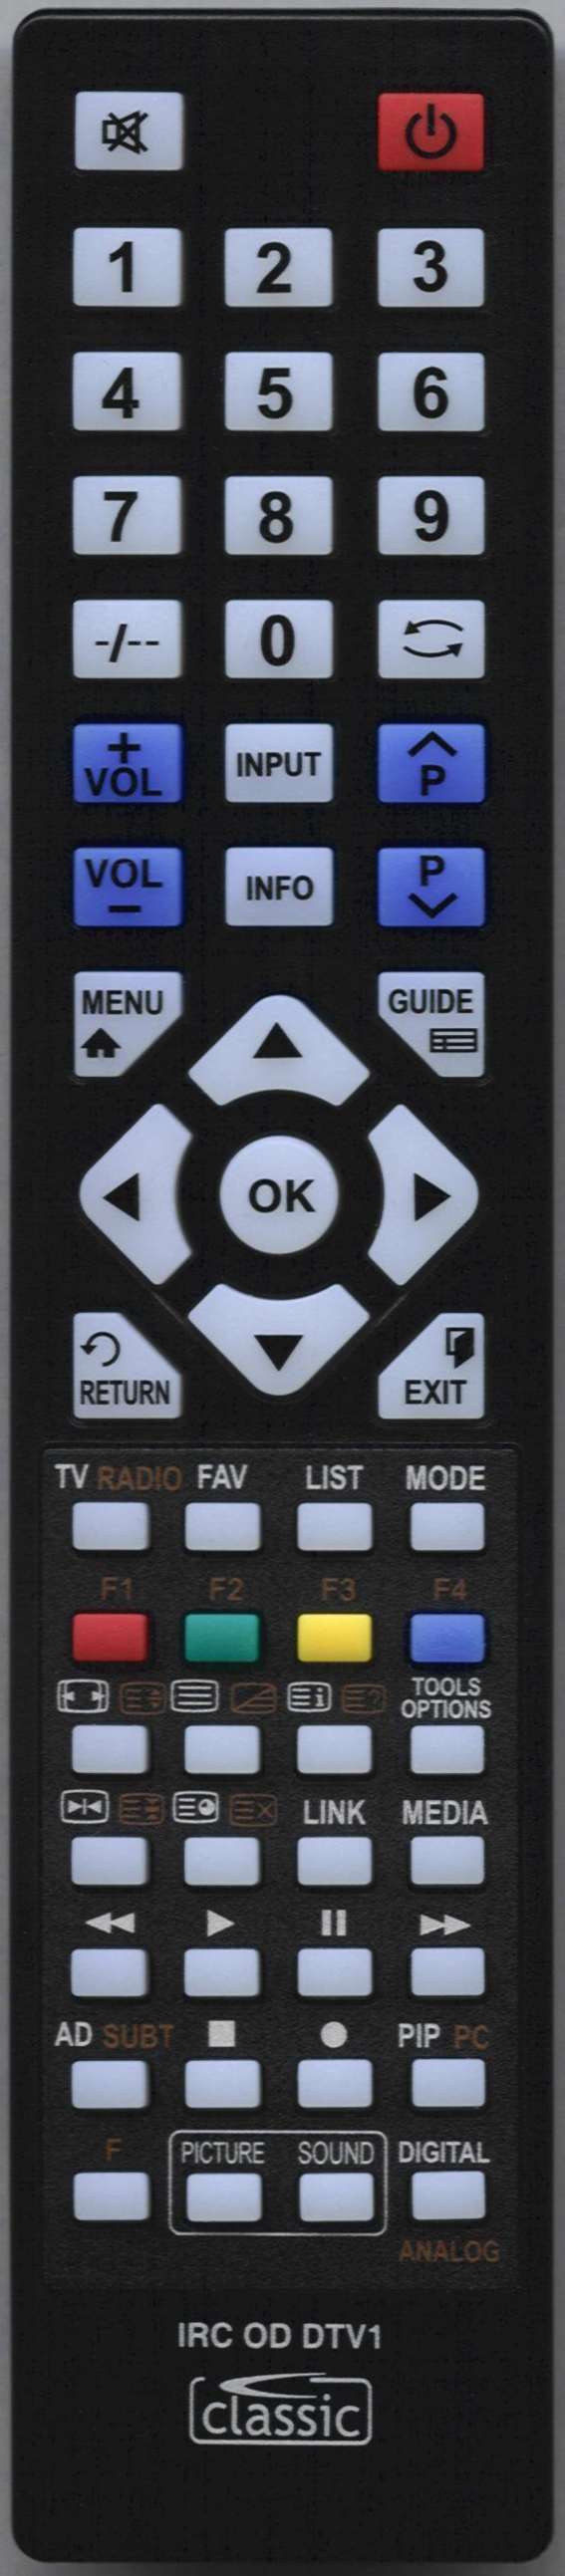 Kenmark 19LVD02D Remote Control